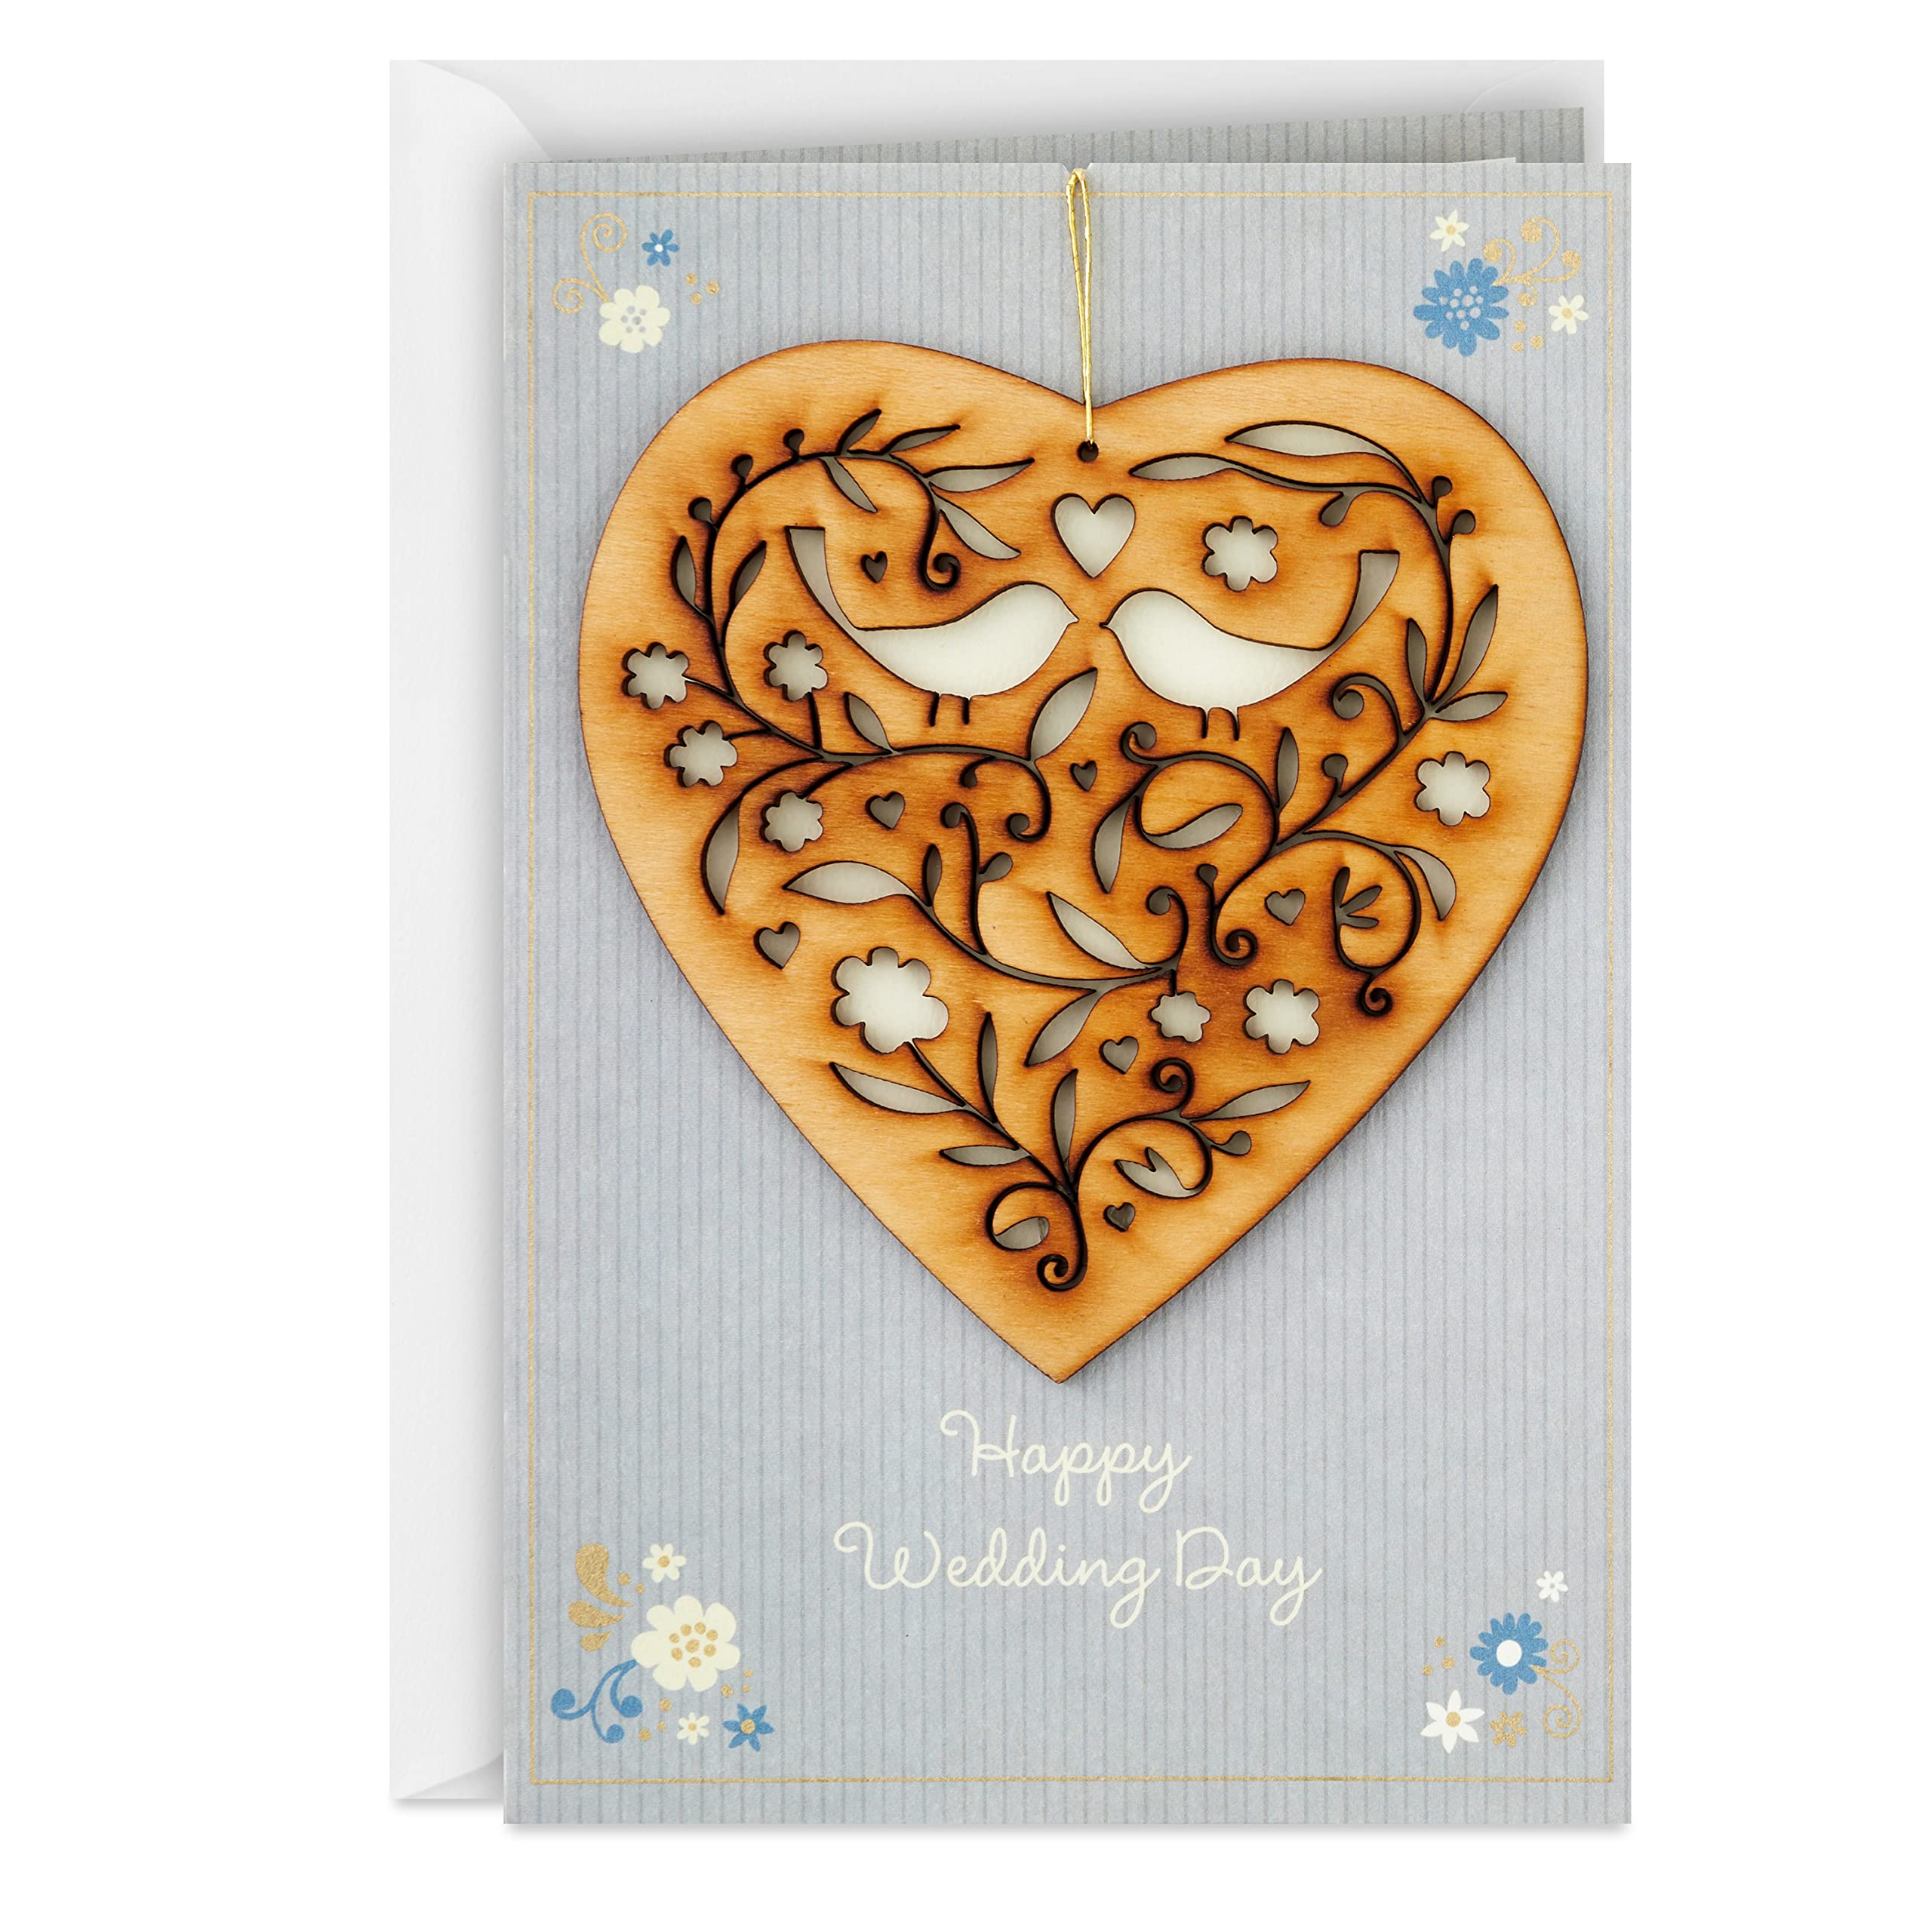 Hallmark Wedding Card (Removable Keepsake Wooden Heart Ornament)